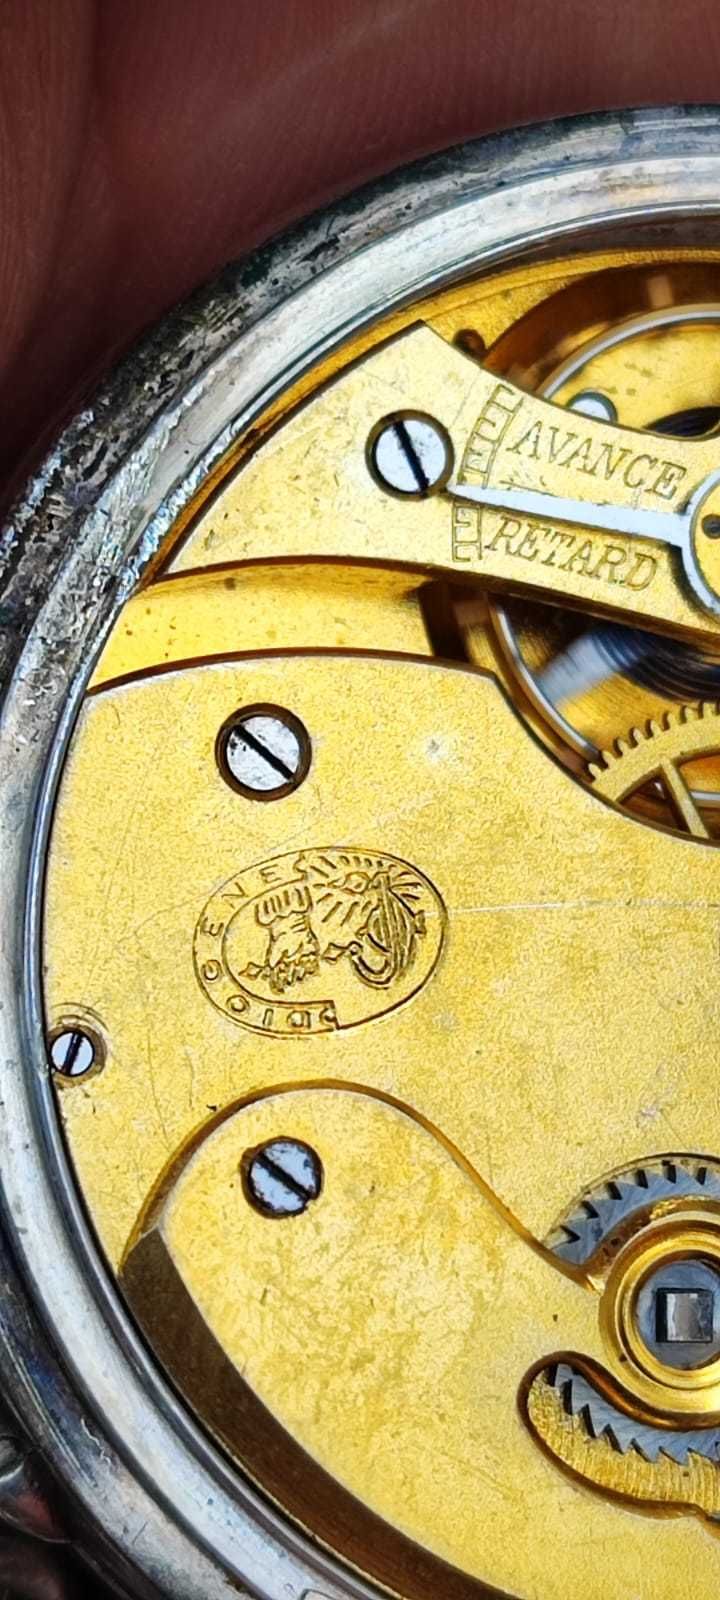 Ceas vechi DIOGENE, 1896, 15 rubine, perfect functional